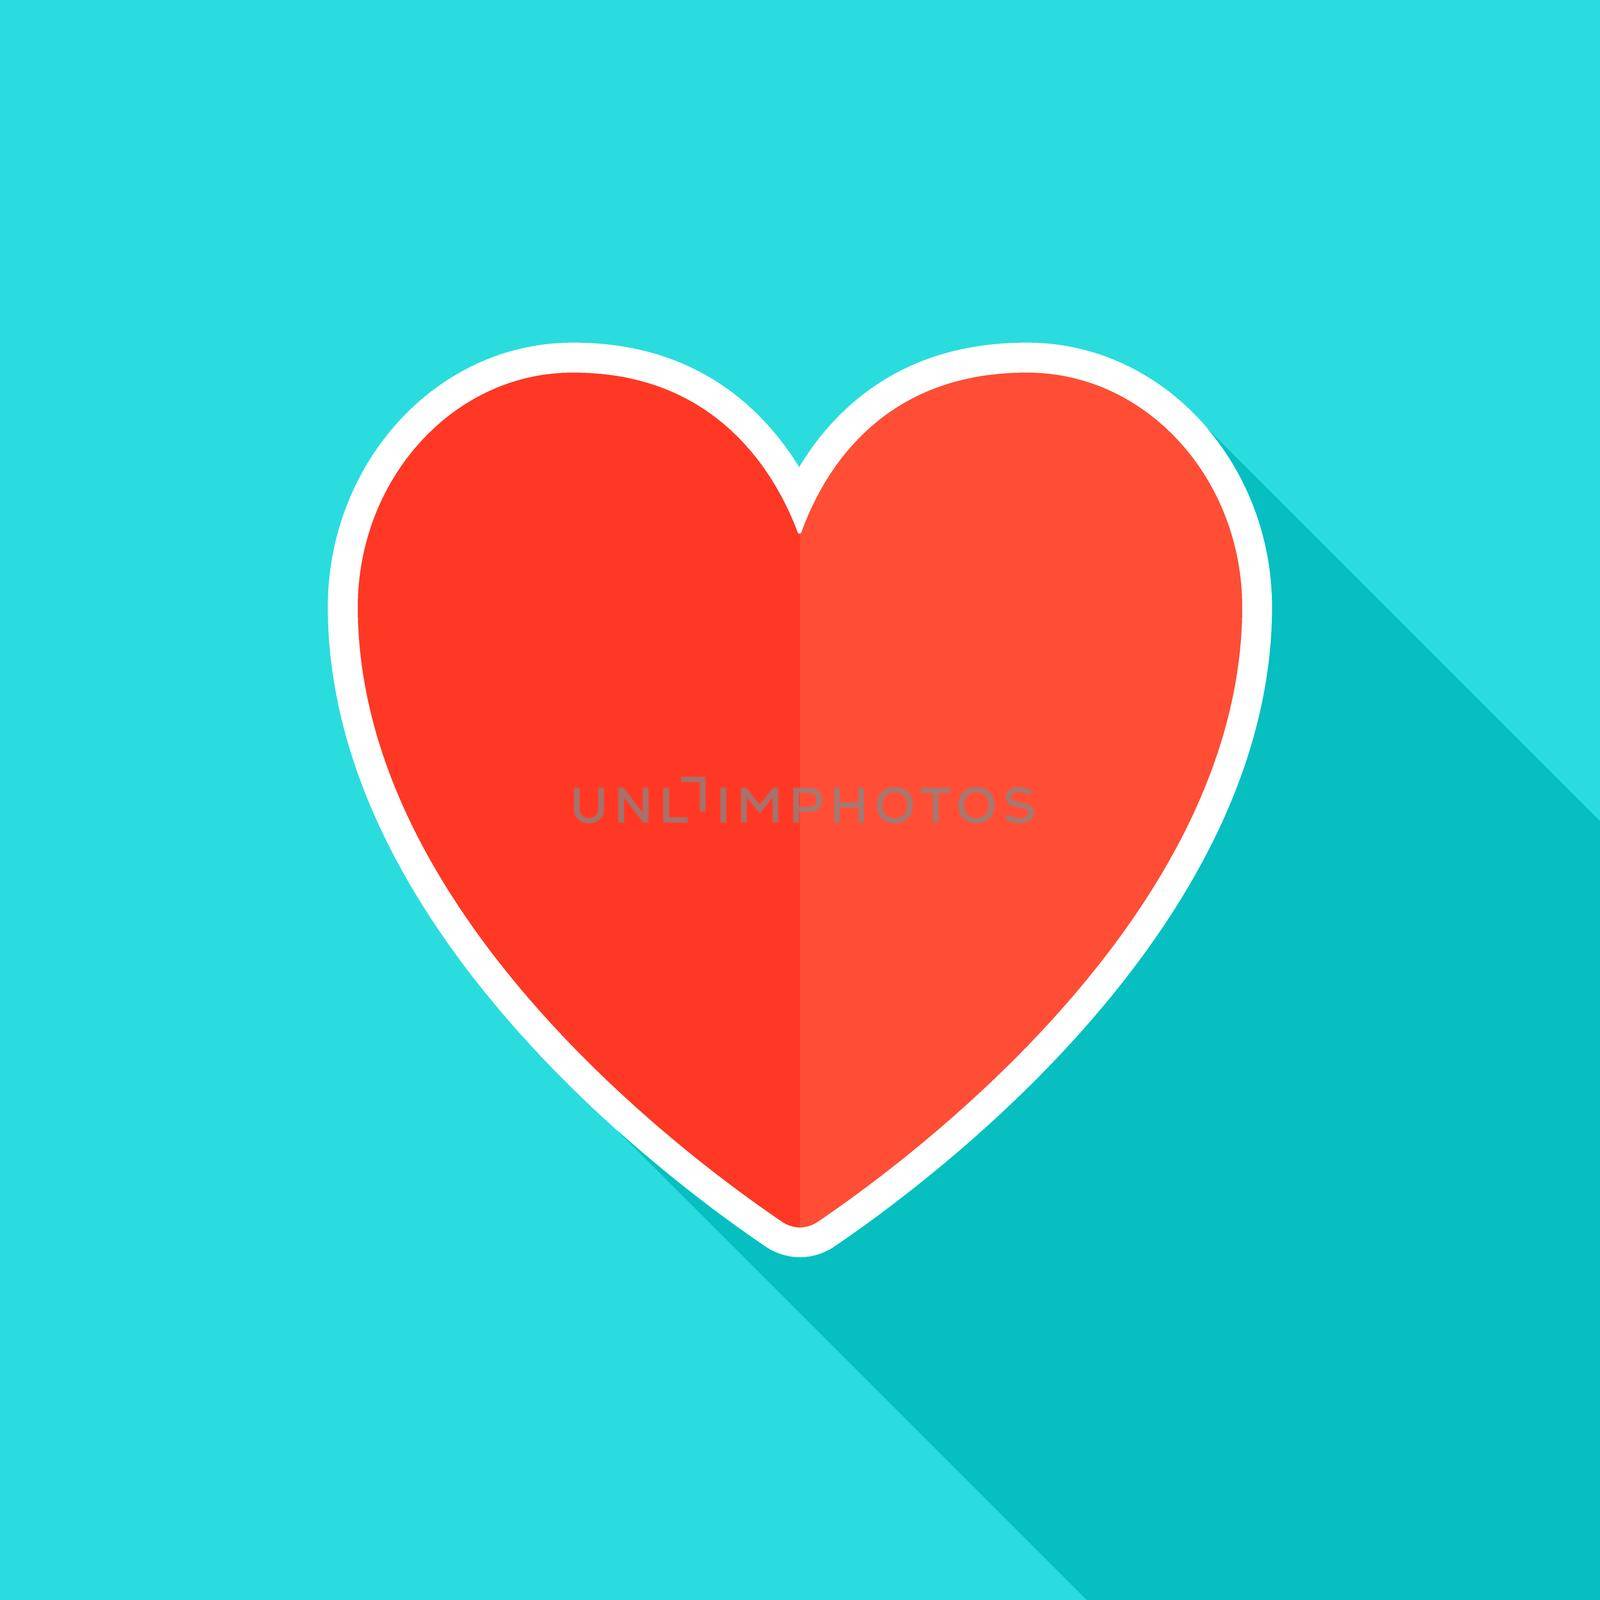 Heart flat icon. Red heart symbol. Vector illustration